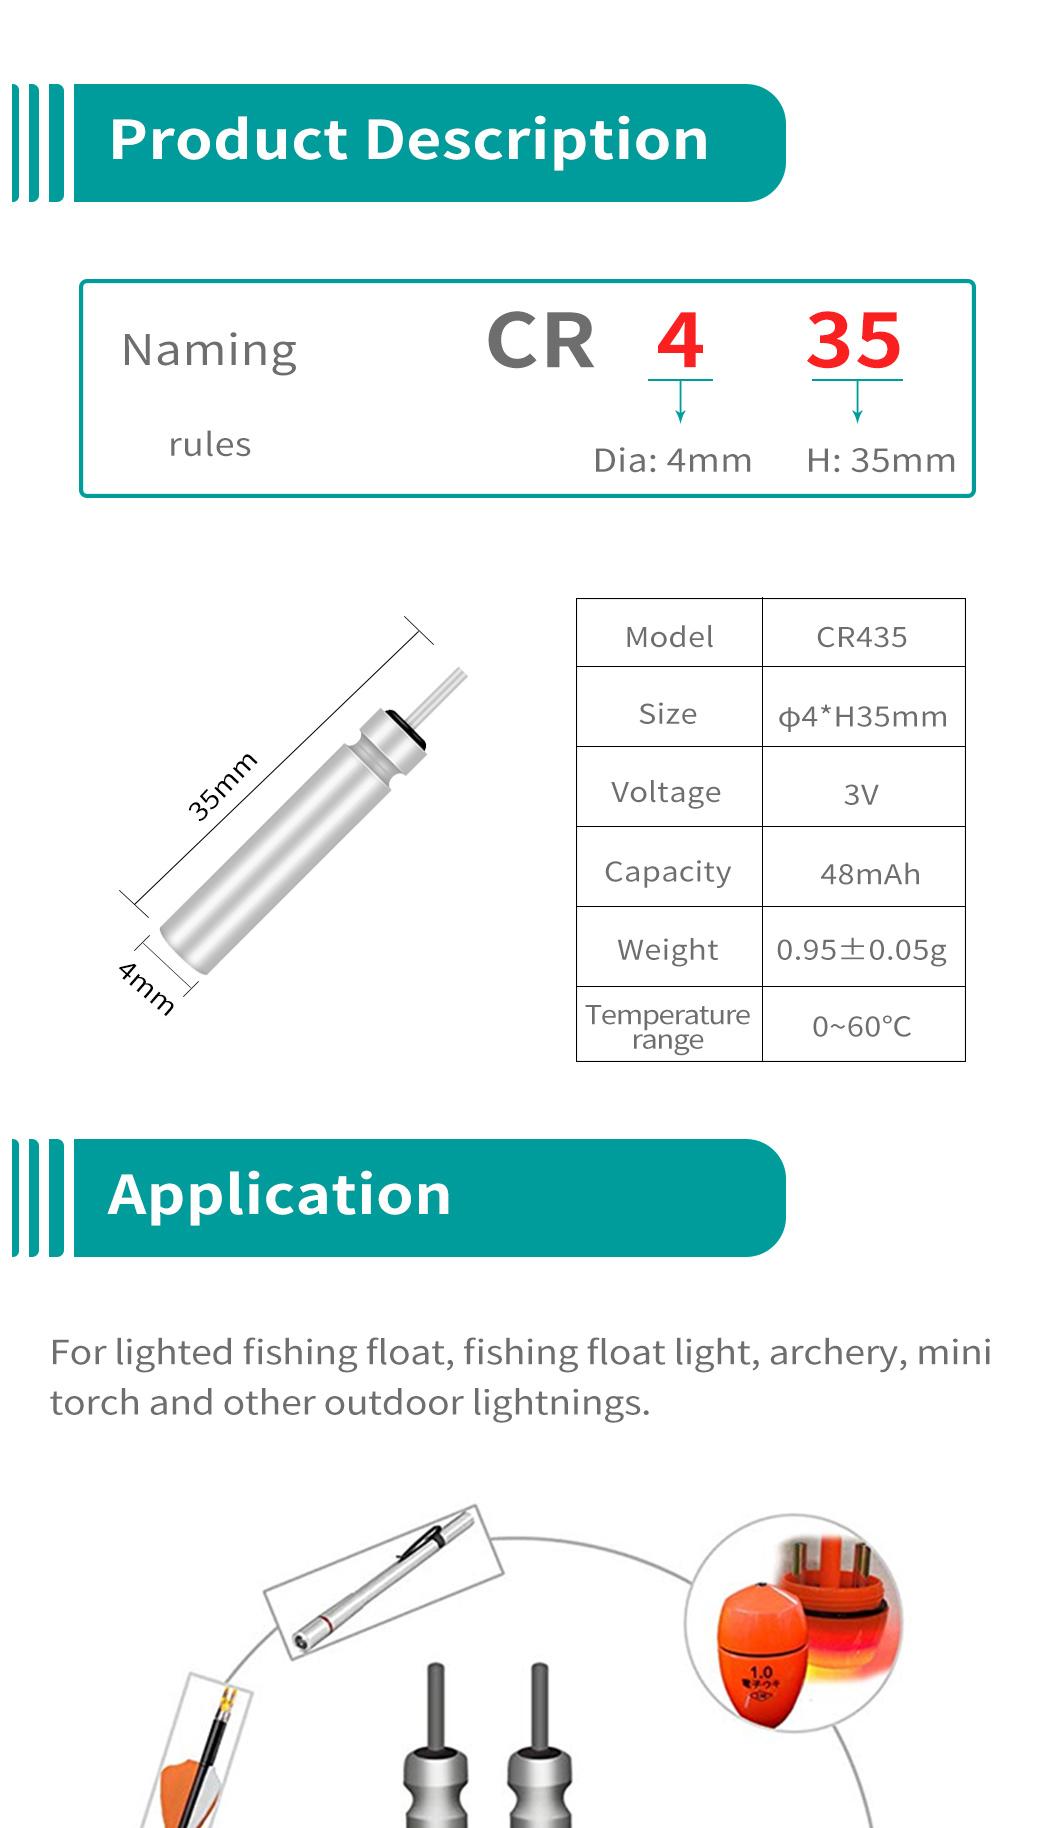 Dlyfull 3V Cr435 for Night Fishing Waterproof Pin Type Tiny Battery